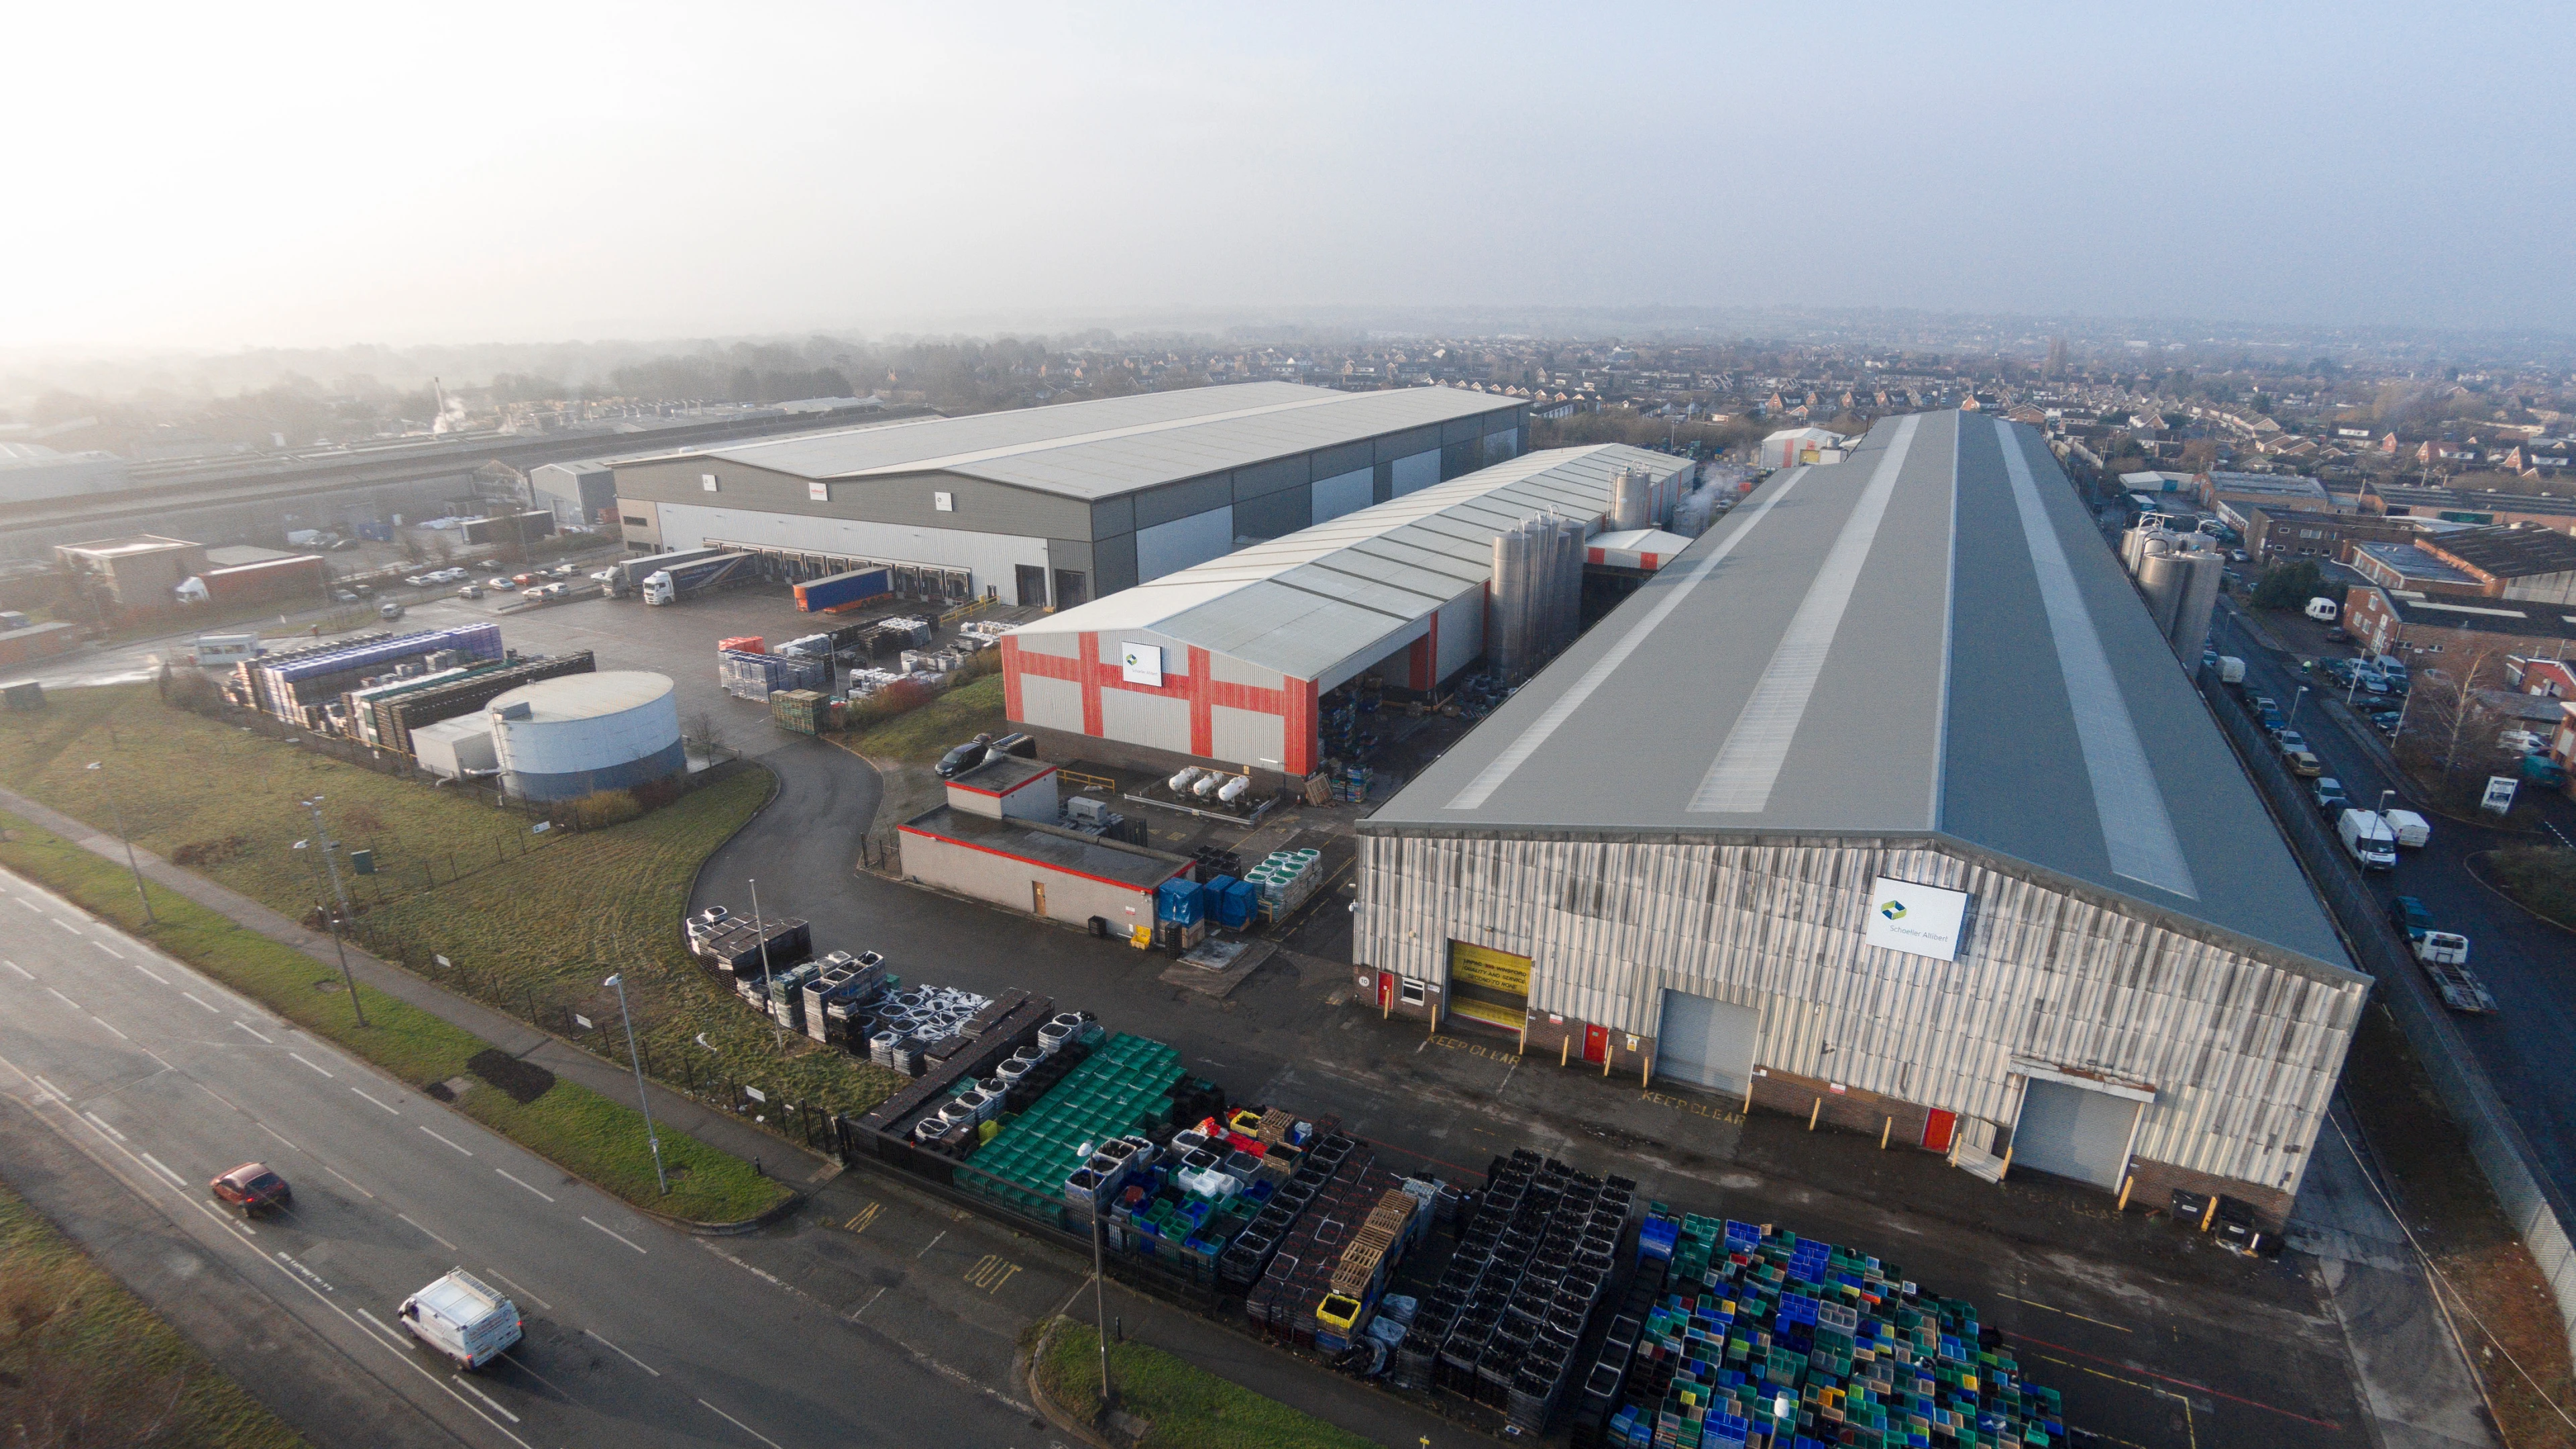 UK janv 2015 - Aerial view of Winsford facility - DJI00067 - Flat - Copy